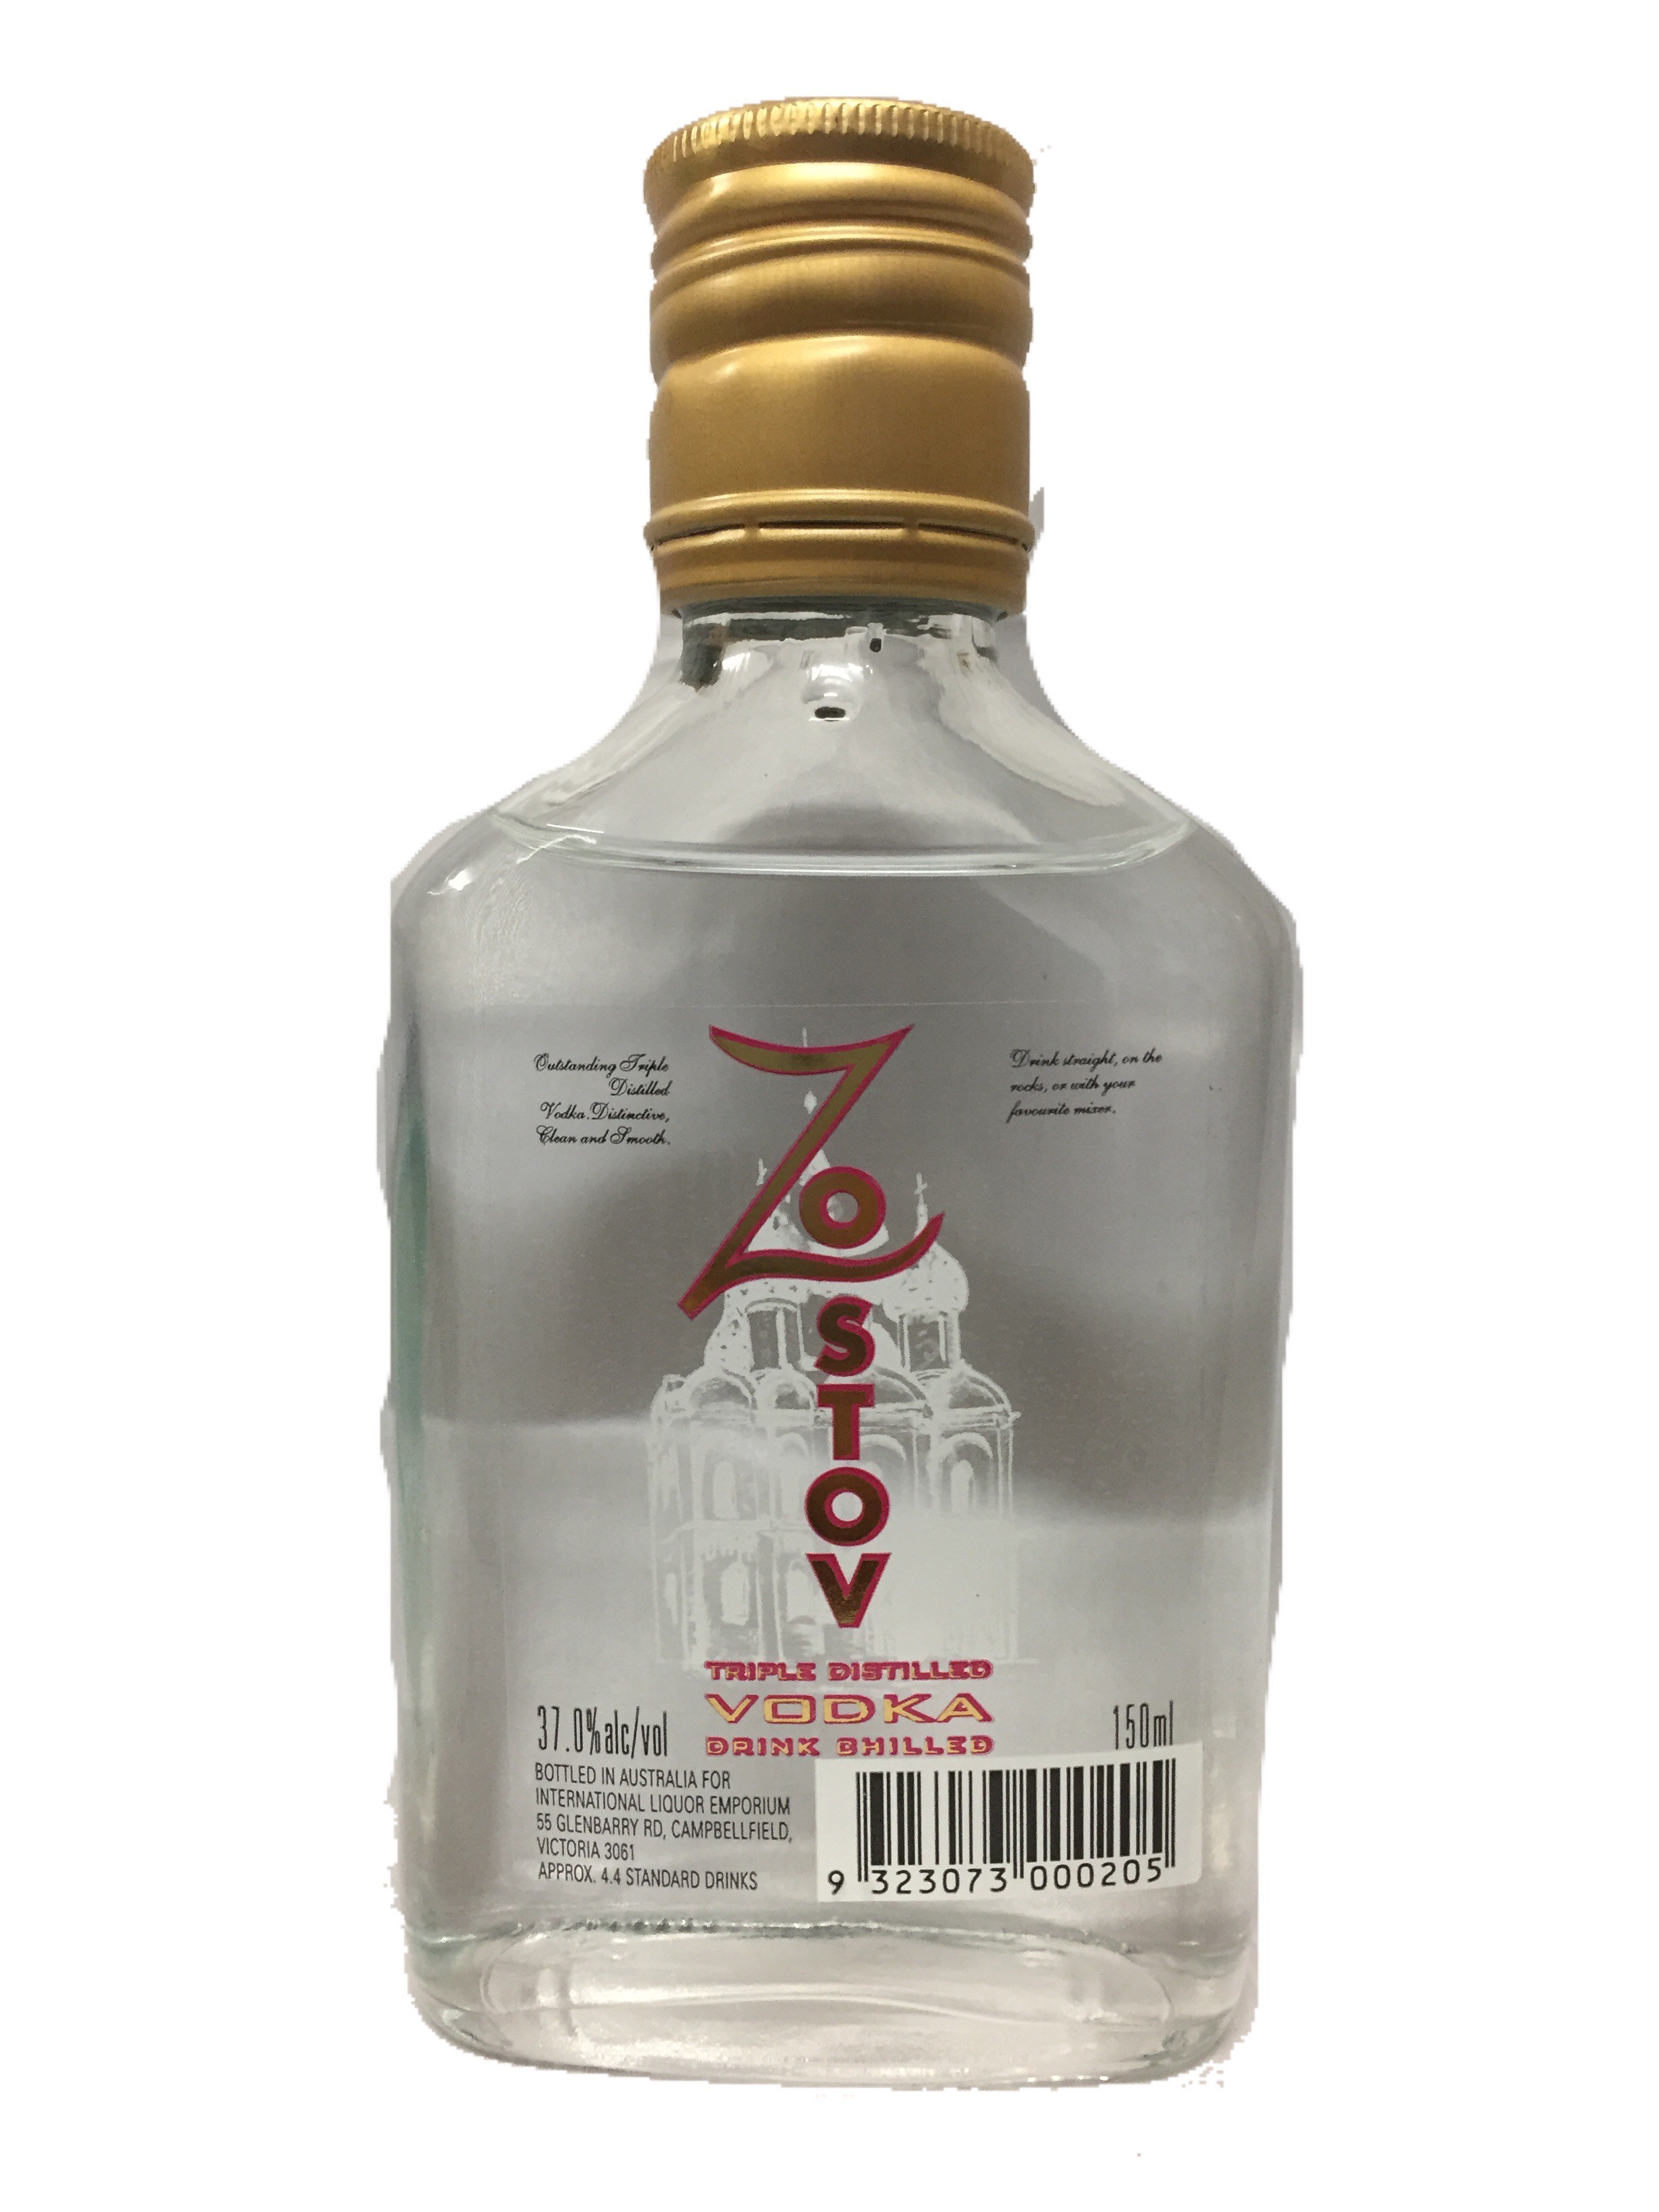 Zostov Vodka 150ml